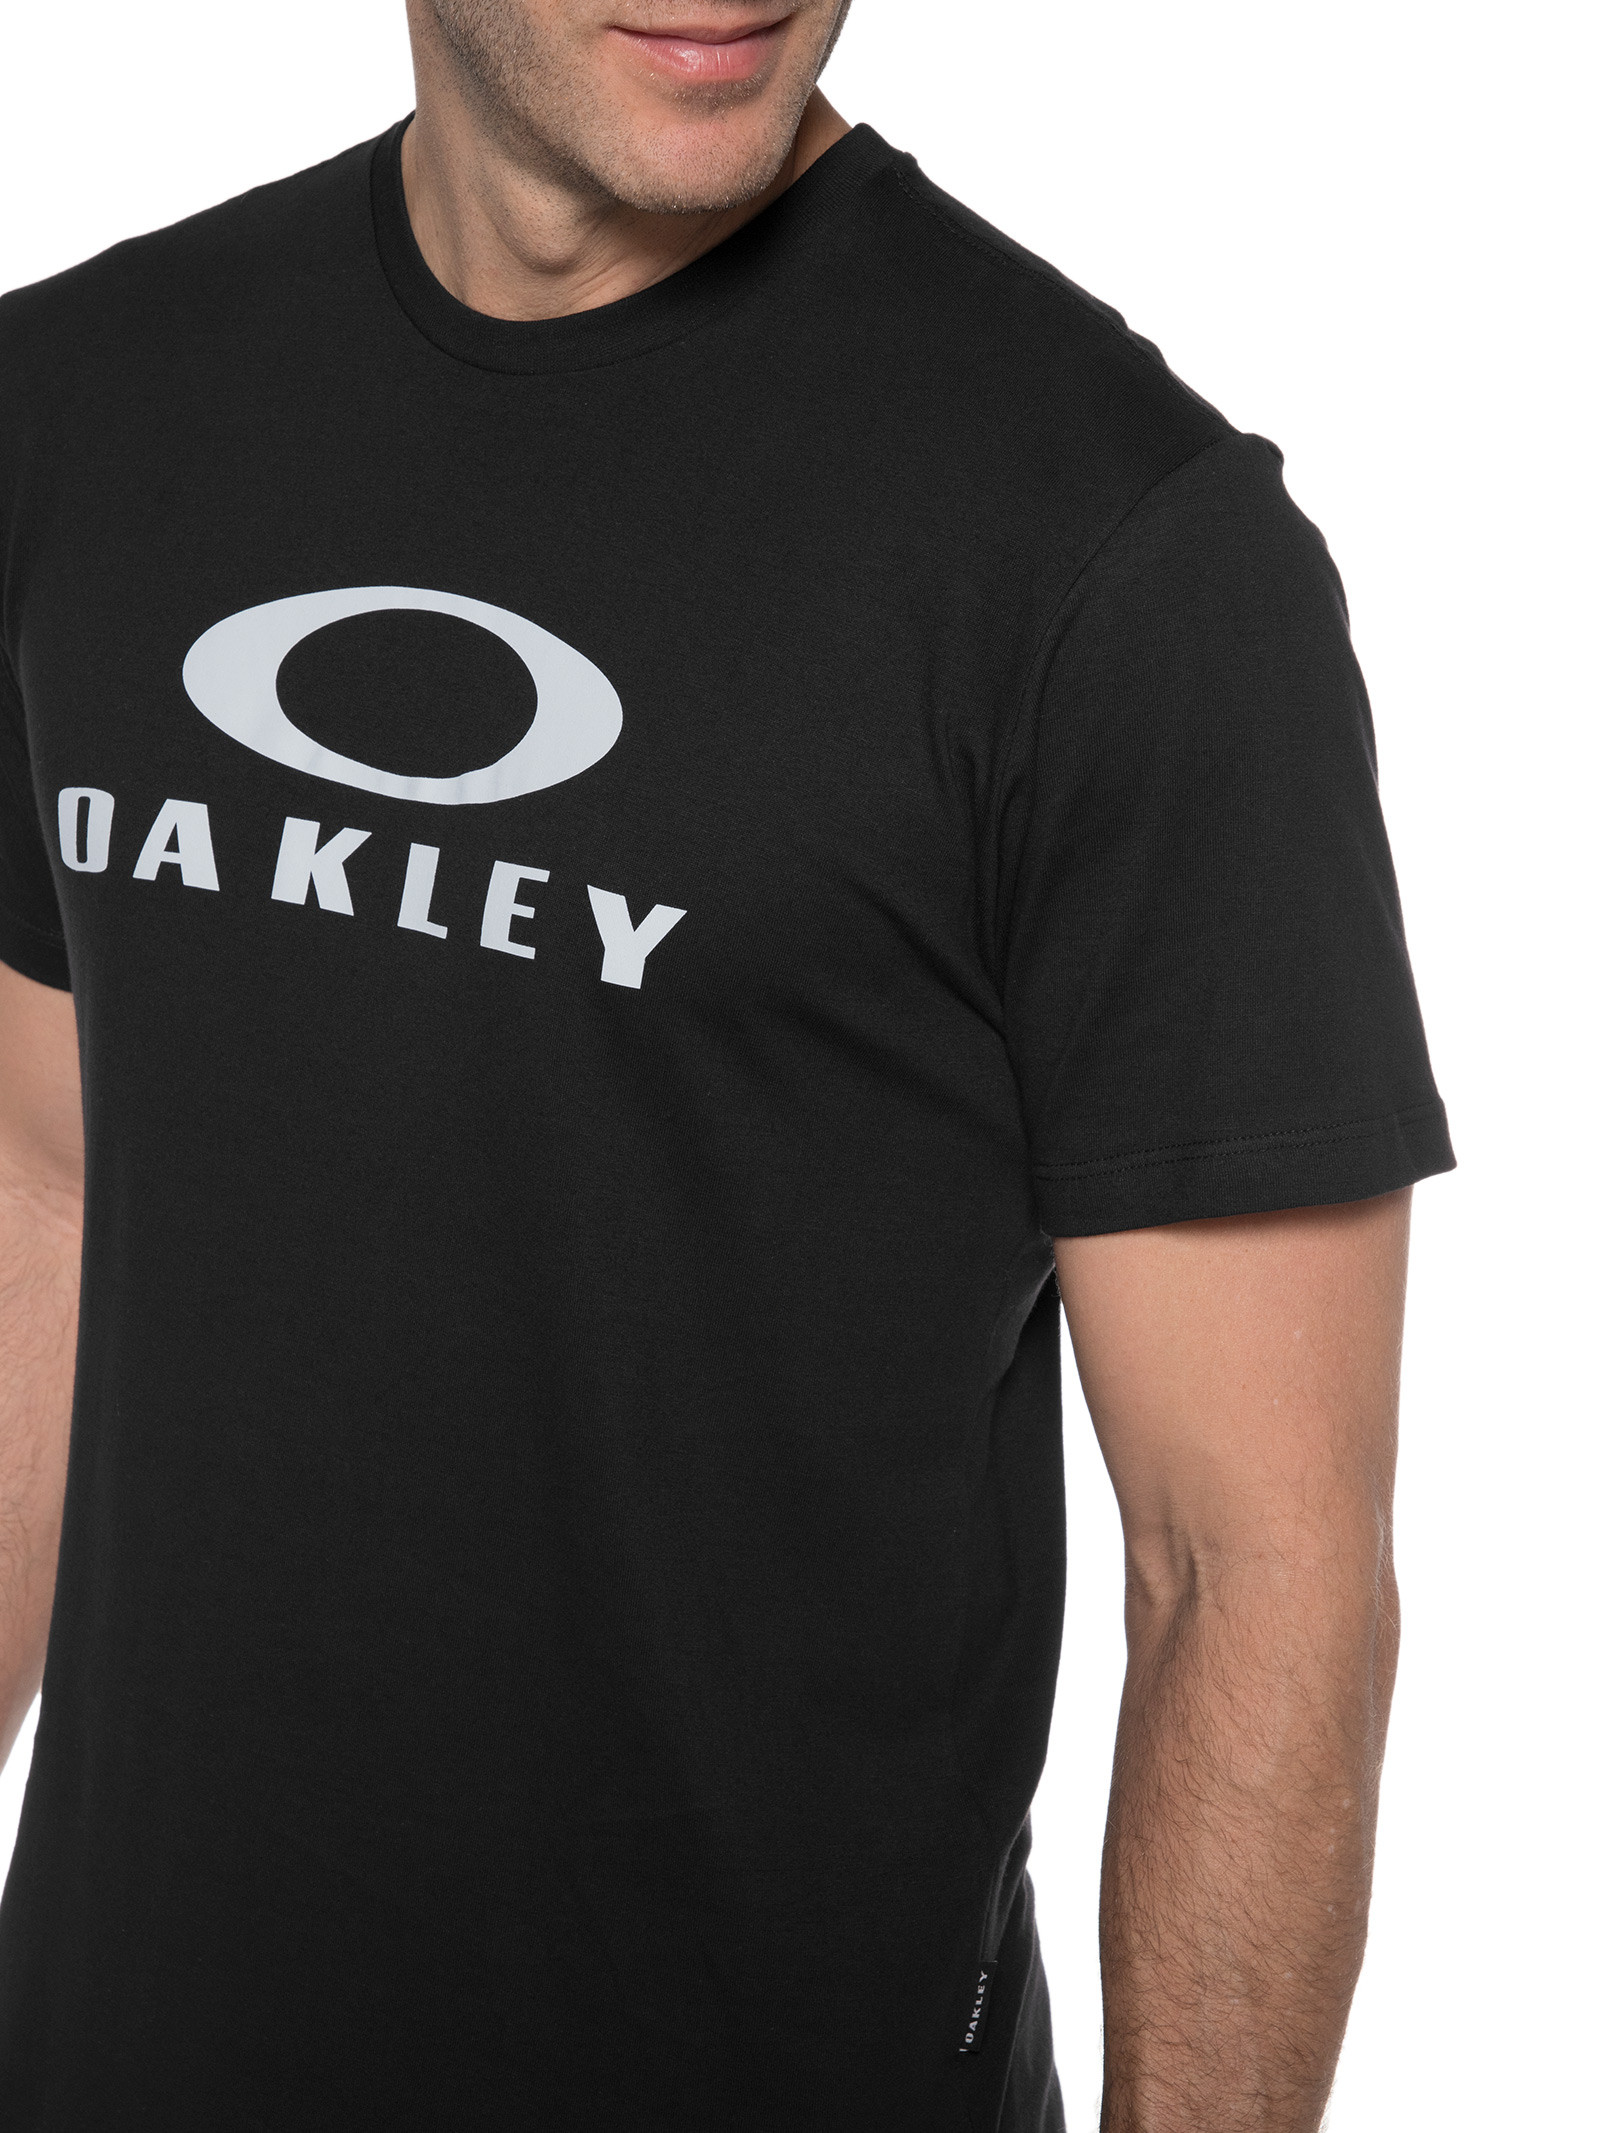 Camiseta Masculina Mod Daily Sport Tee Iii - Oakley - Branco - Oqvestir